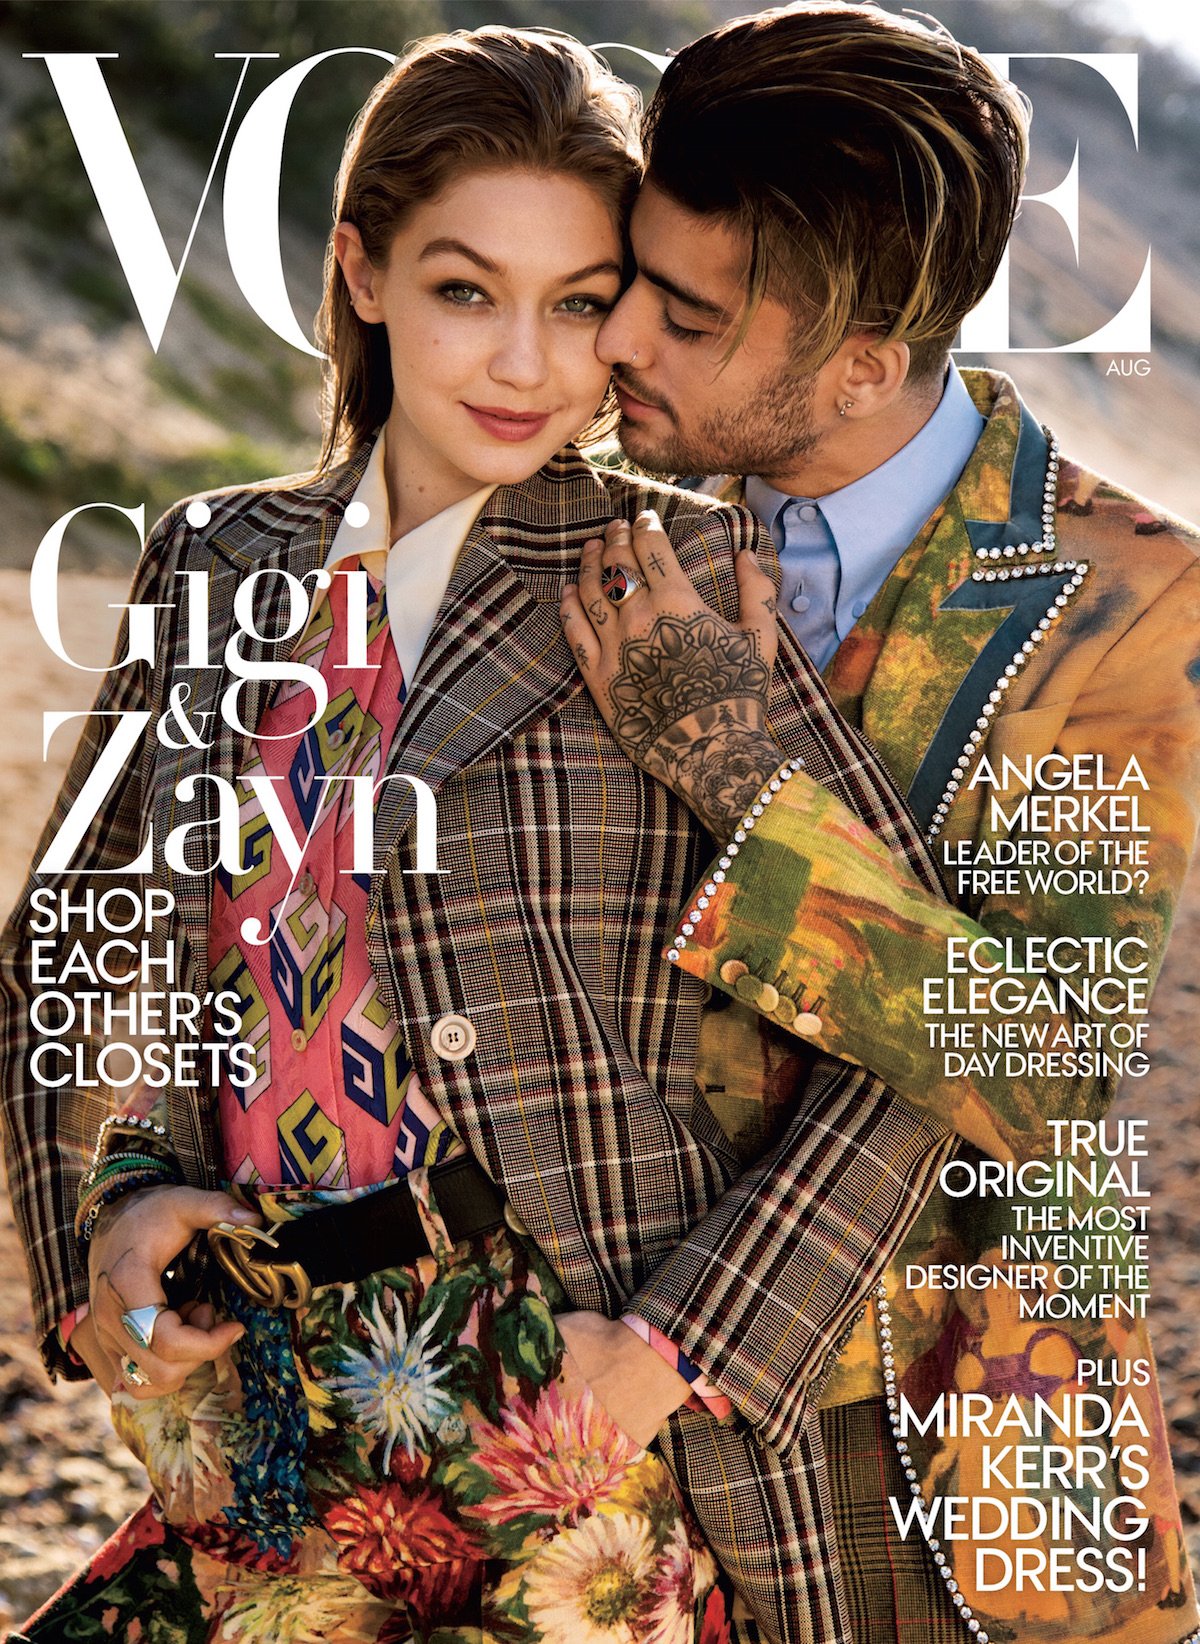 Does Vogue include men?